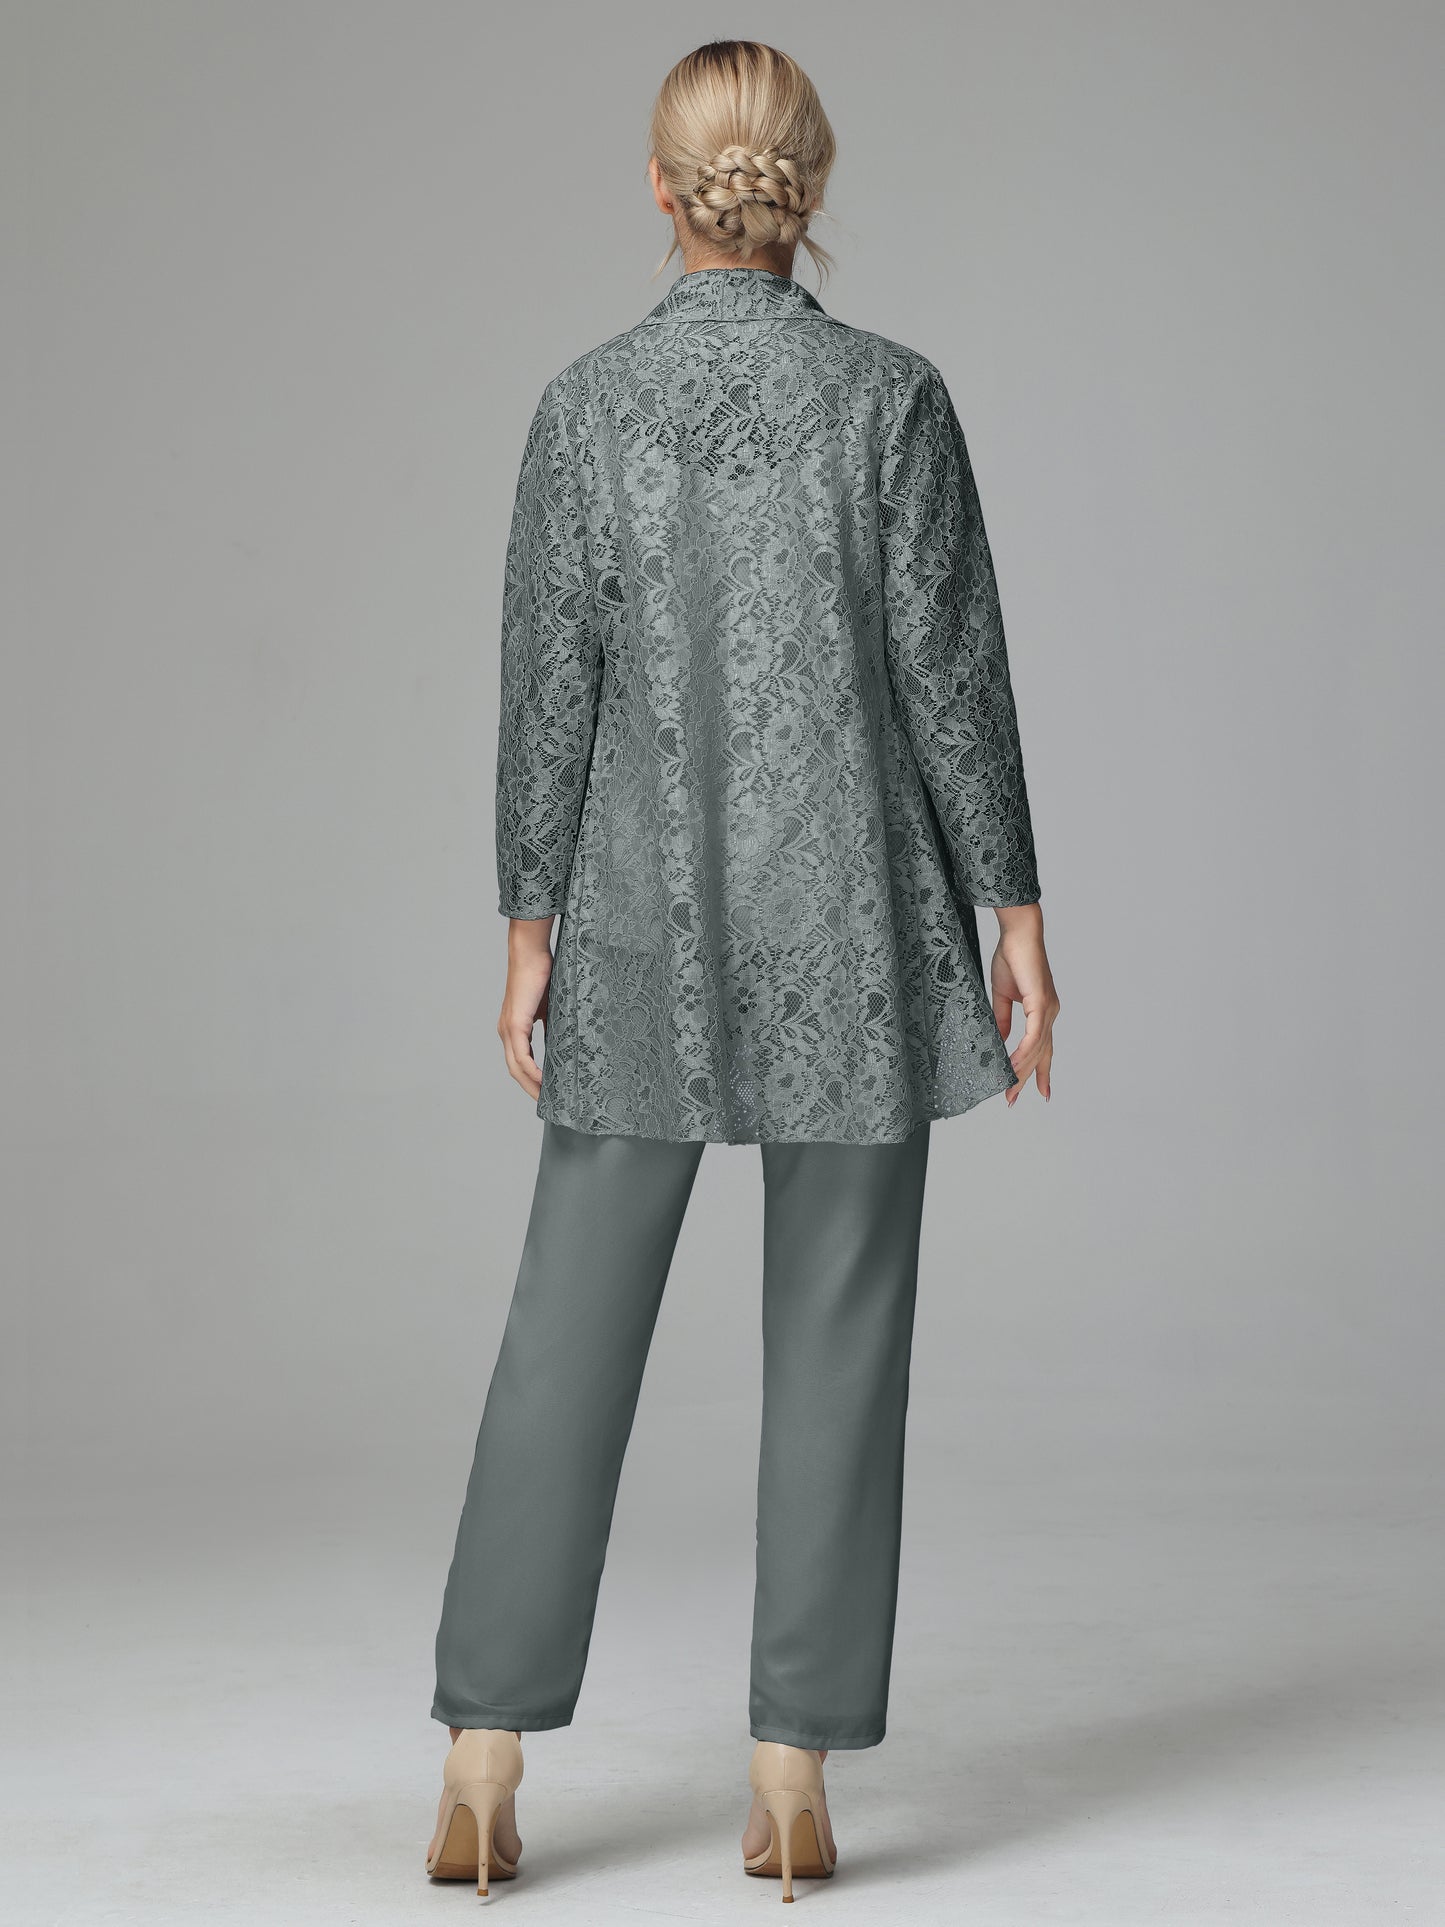 Pantsuit Separates Scoop Floor-Length Chiffon Mother of the Bride Dress